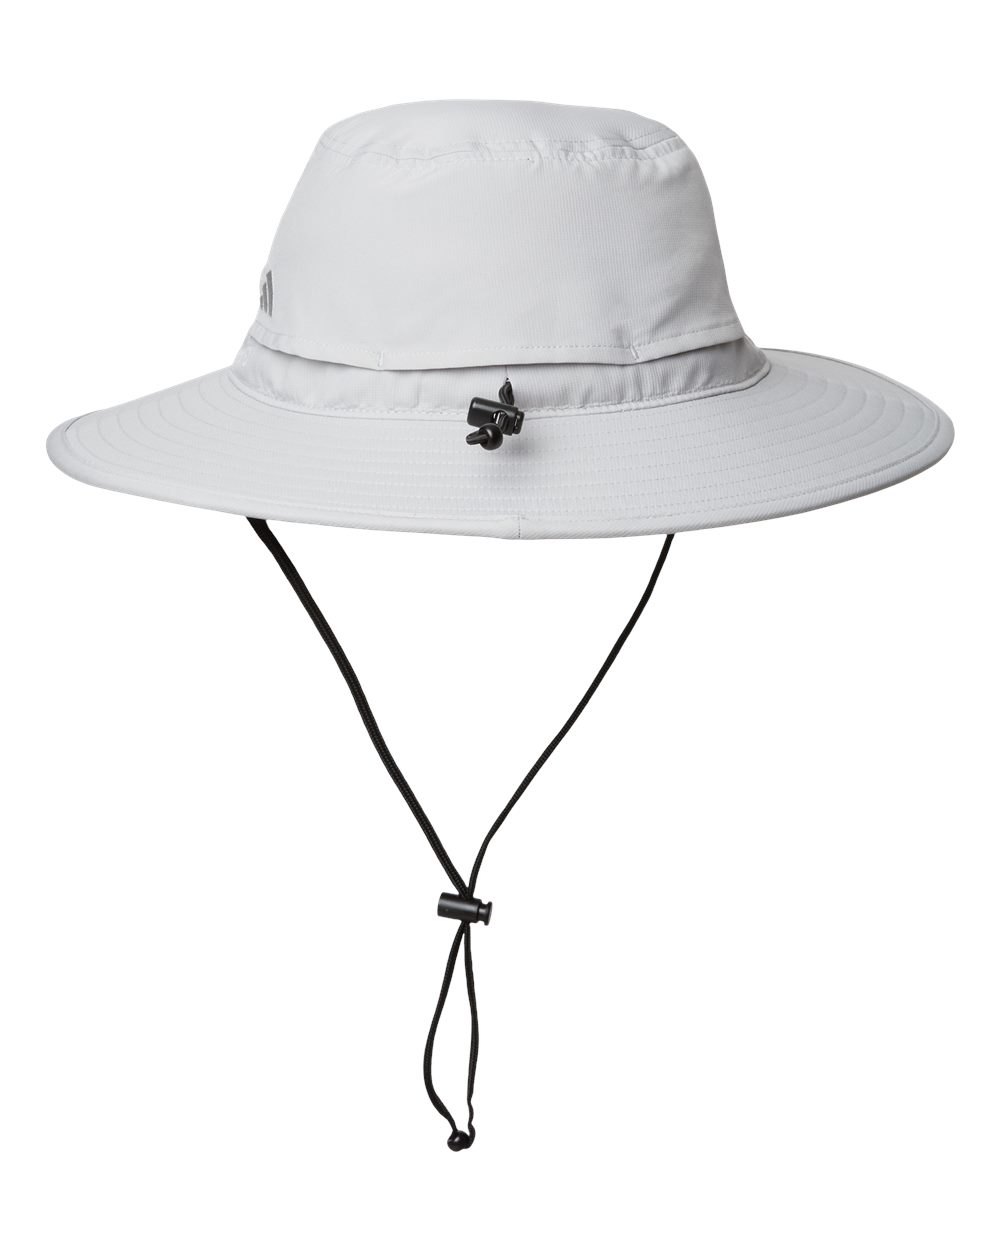 Adidas A672S - Sunstainable Sun Hat $30.29 - Headwear